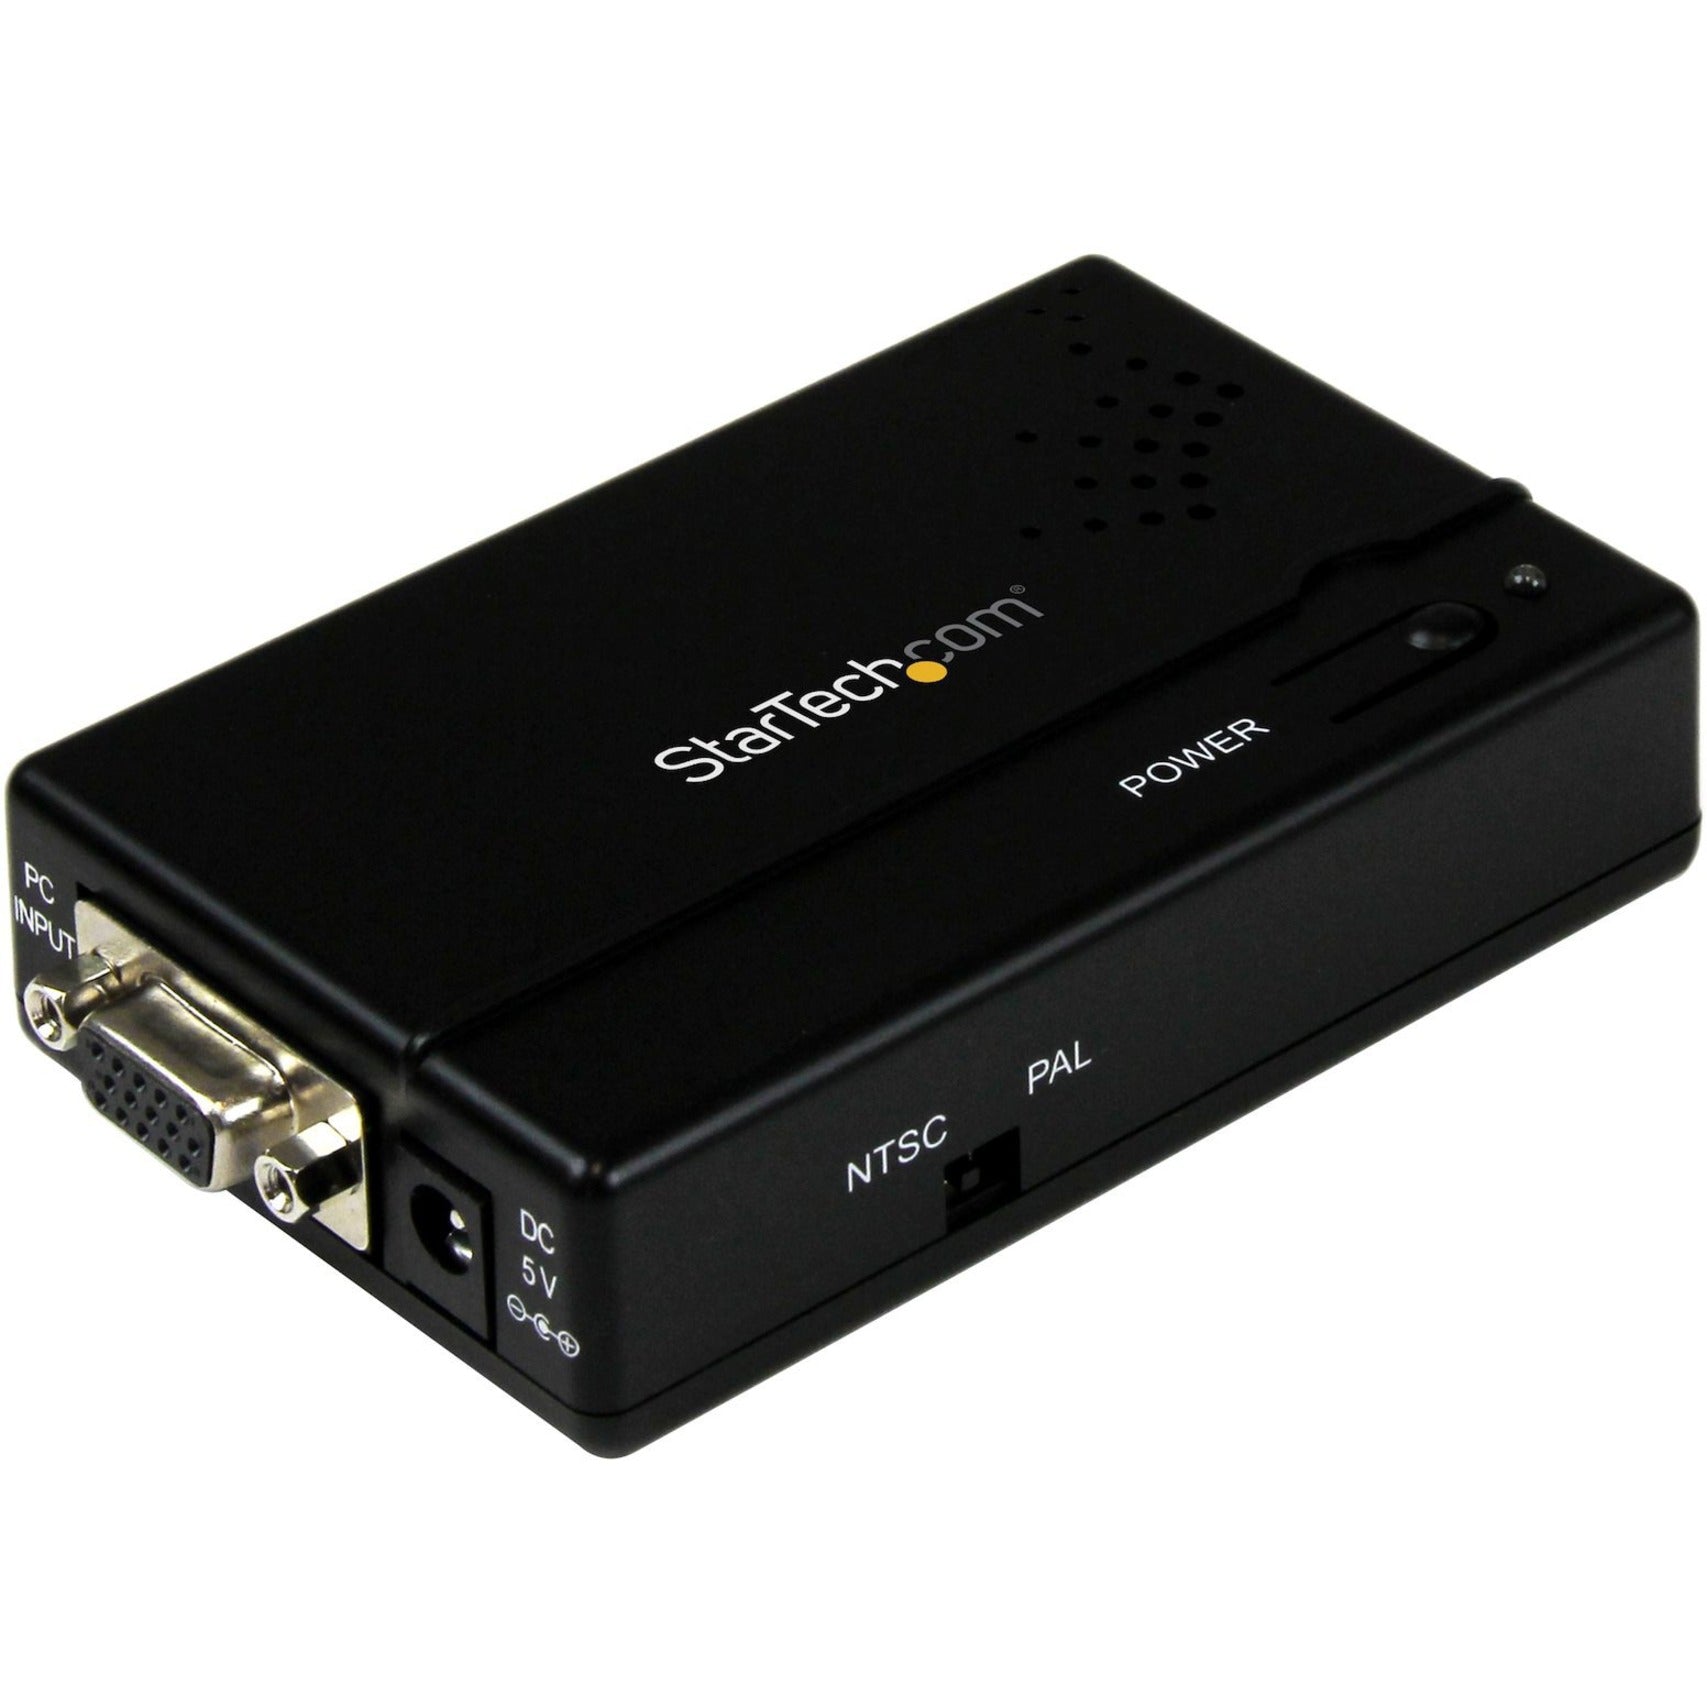 StarTech.com VGA2VID High Resolution VGA to Composite or S-Video Signal Converter, Converts VGA to Composite or S-Video